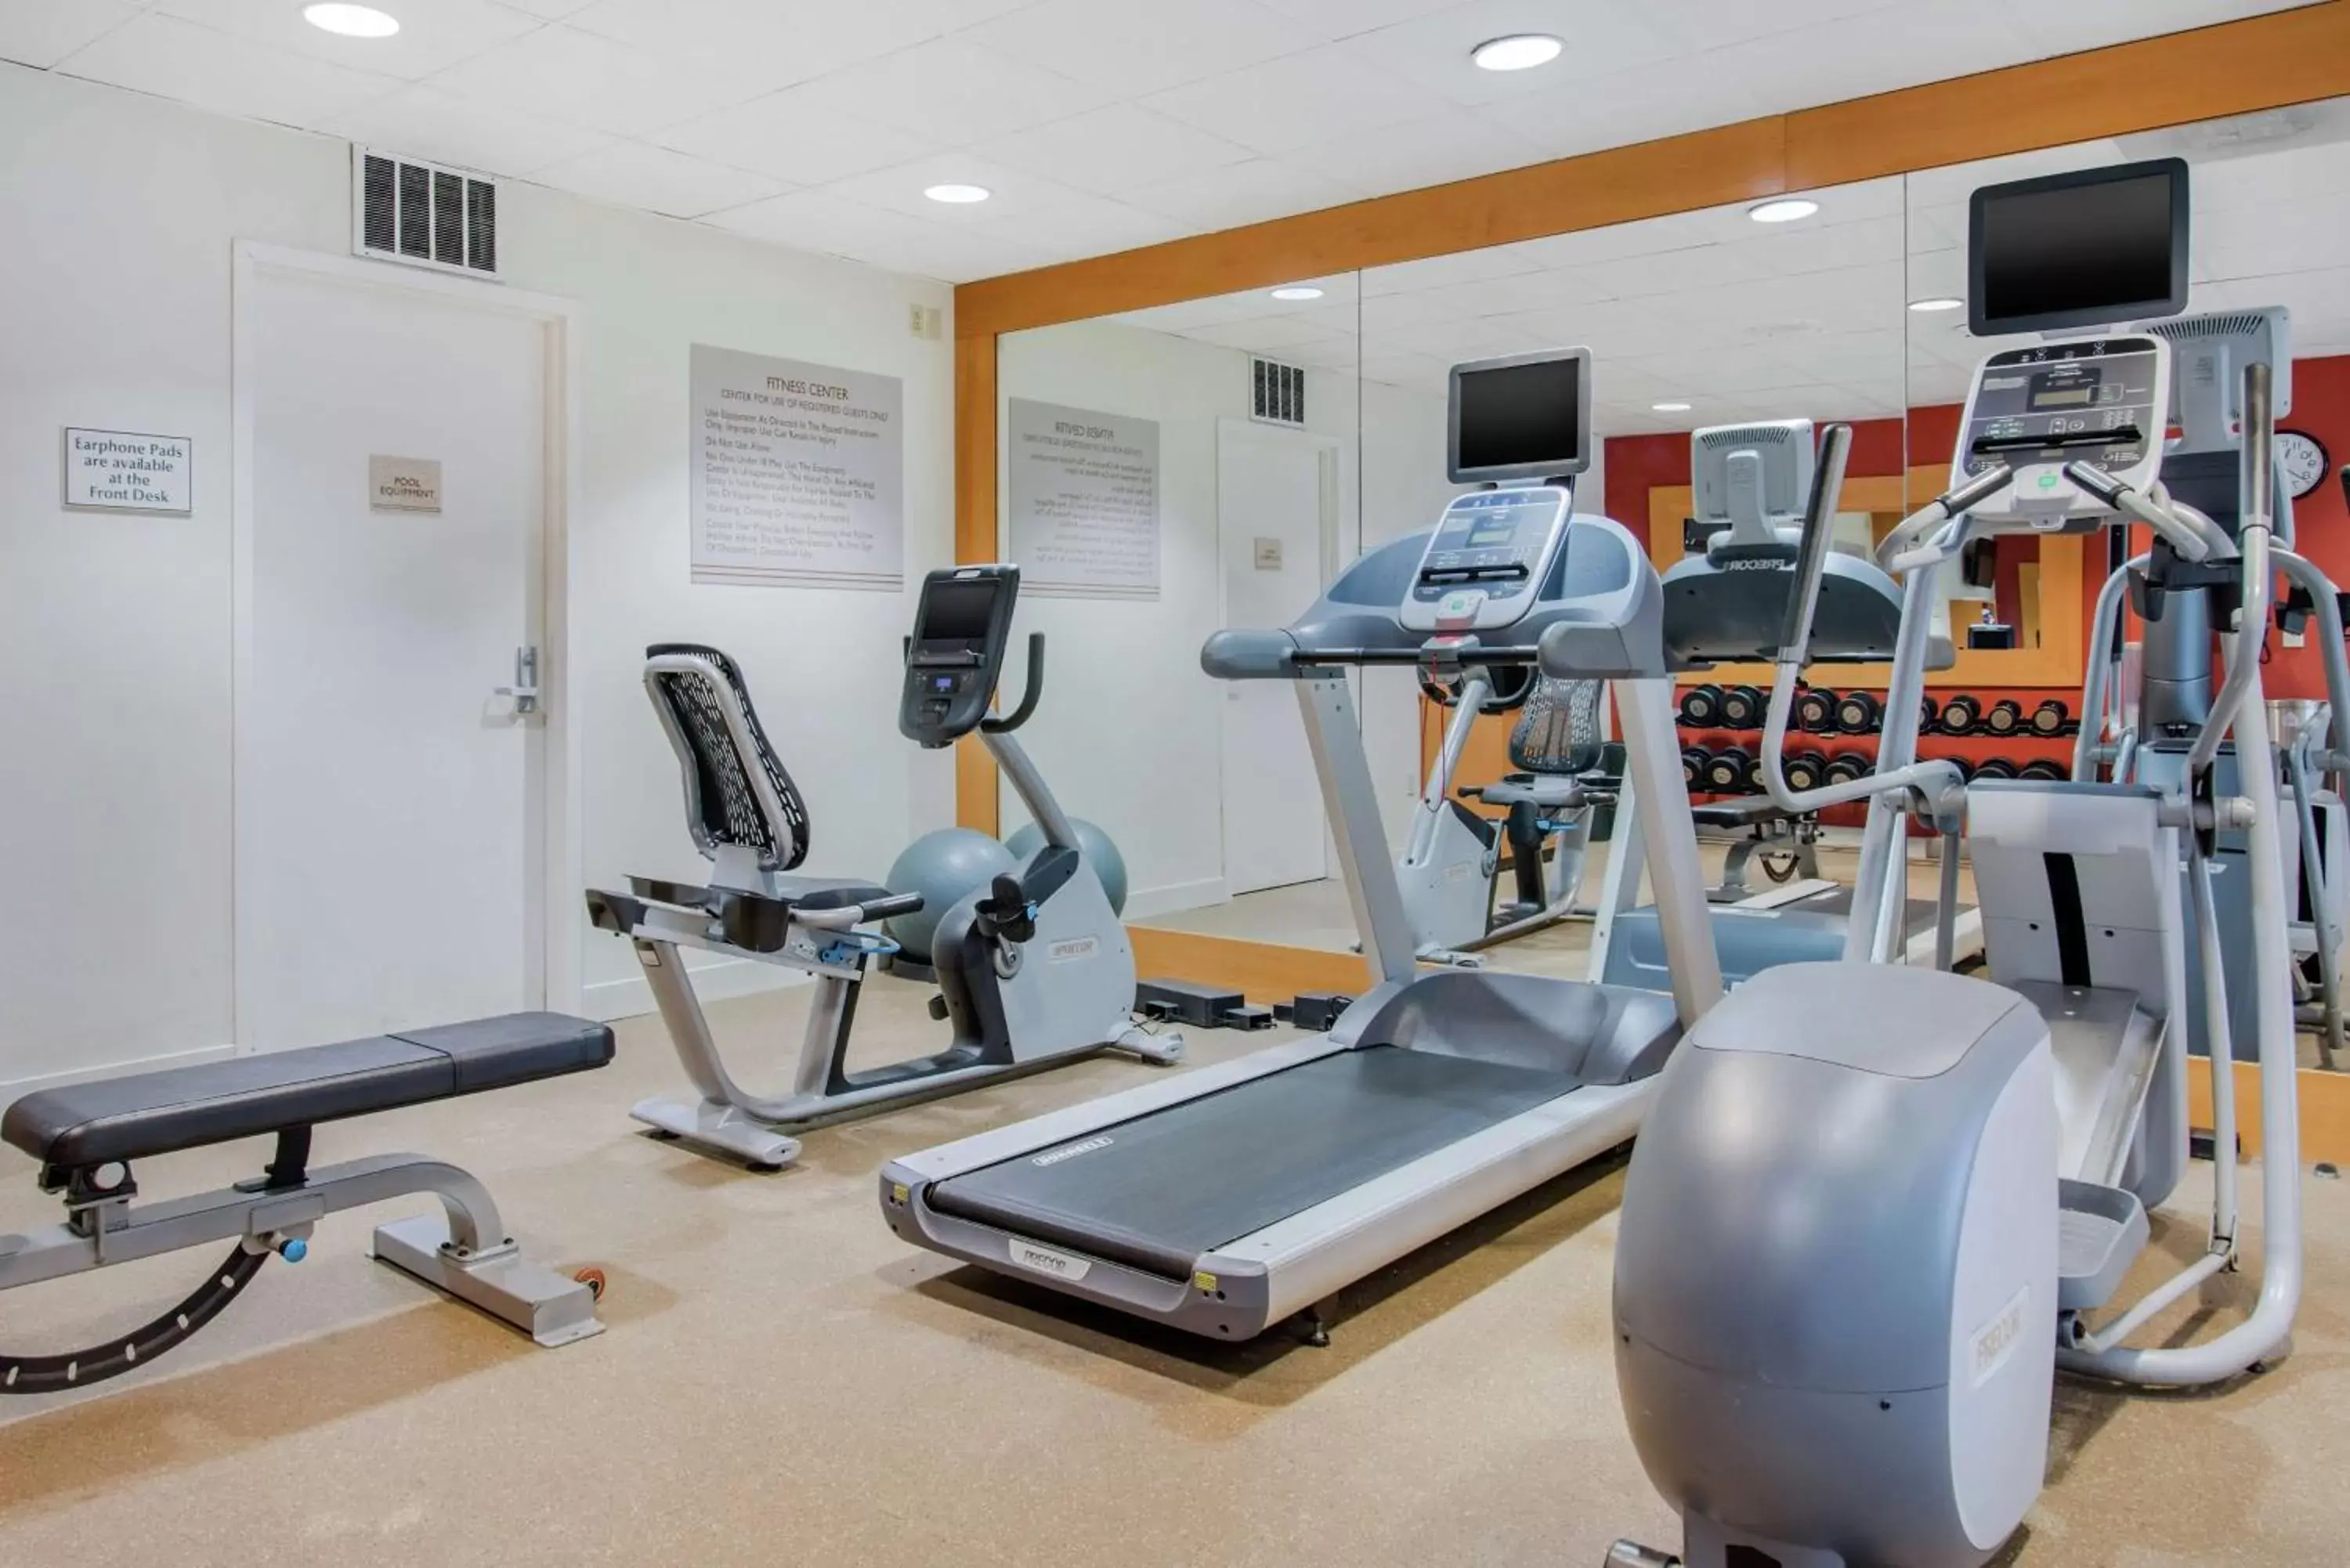 Fitness centre/facilities, Fitness Center/Facilities in Hilton Garden Inn Portland Airport